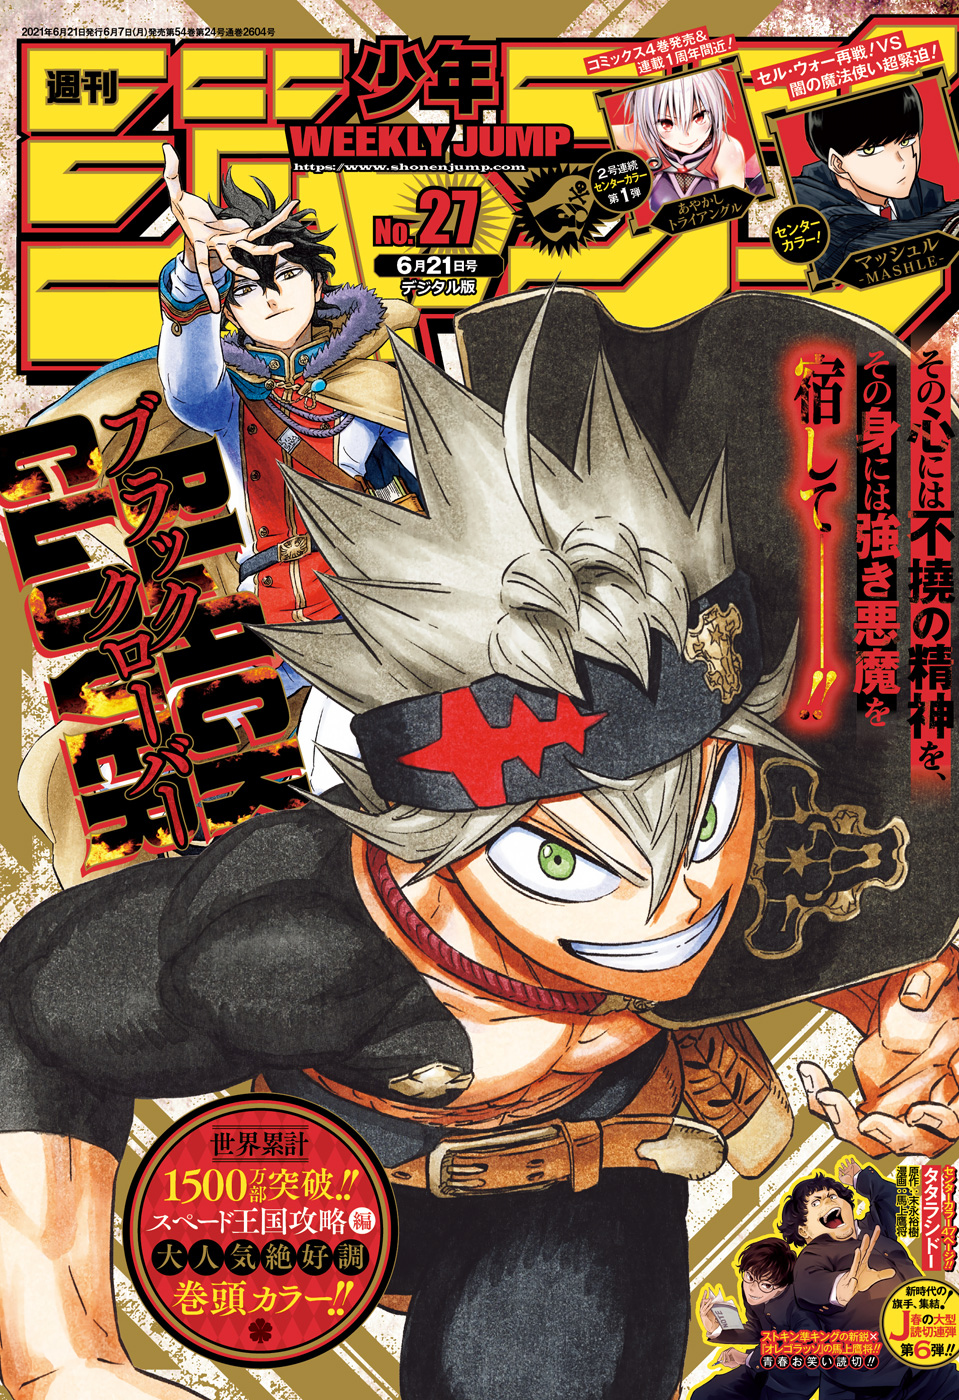 Weekly Shonen Jump Issue 27 21 Jump Database Fandom